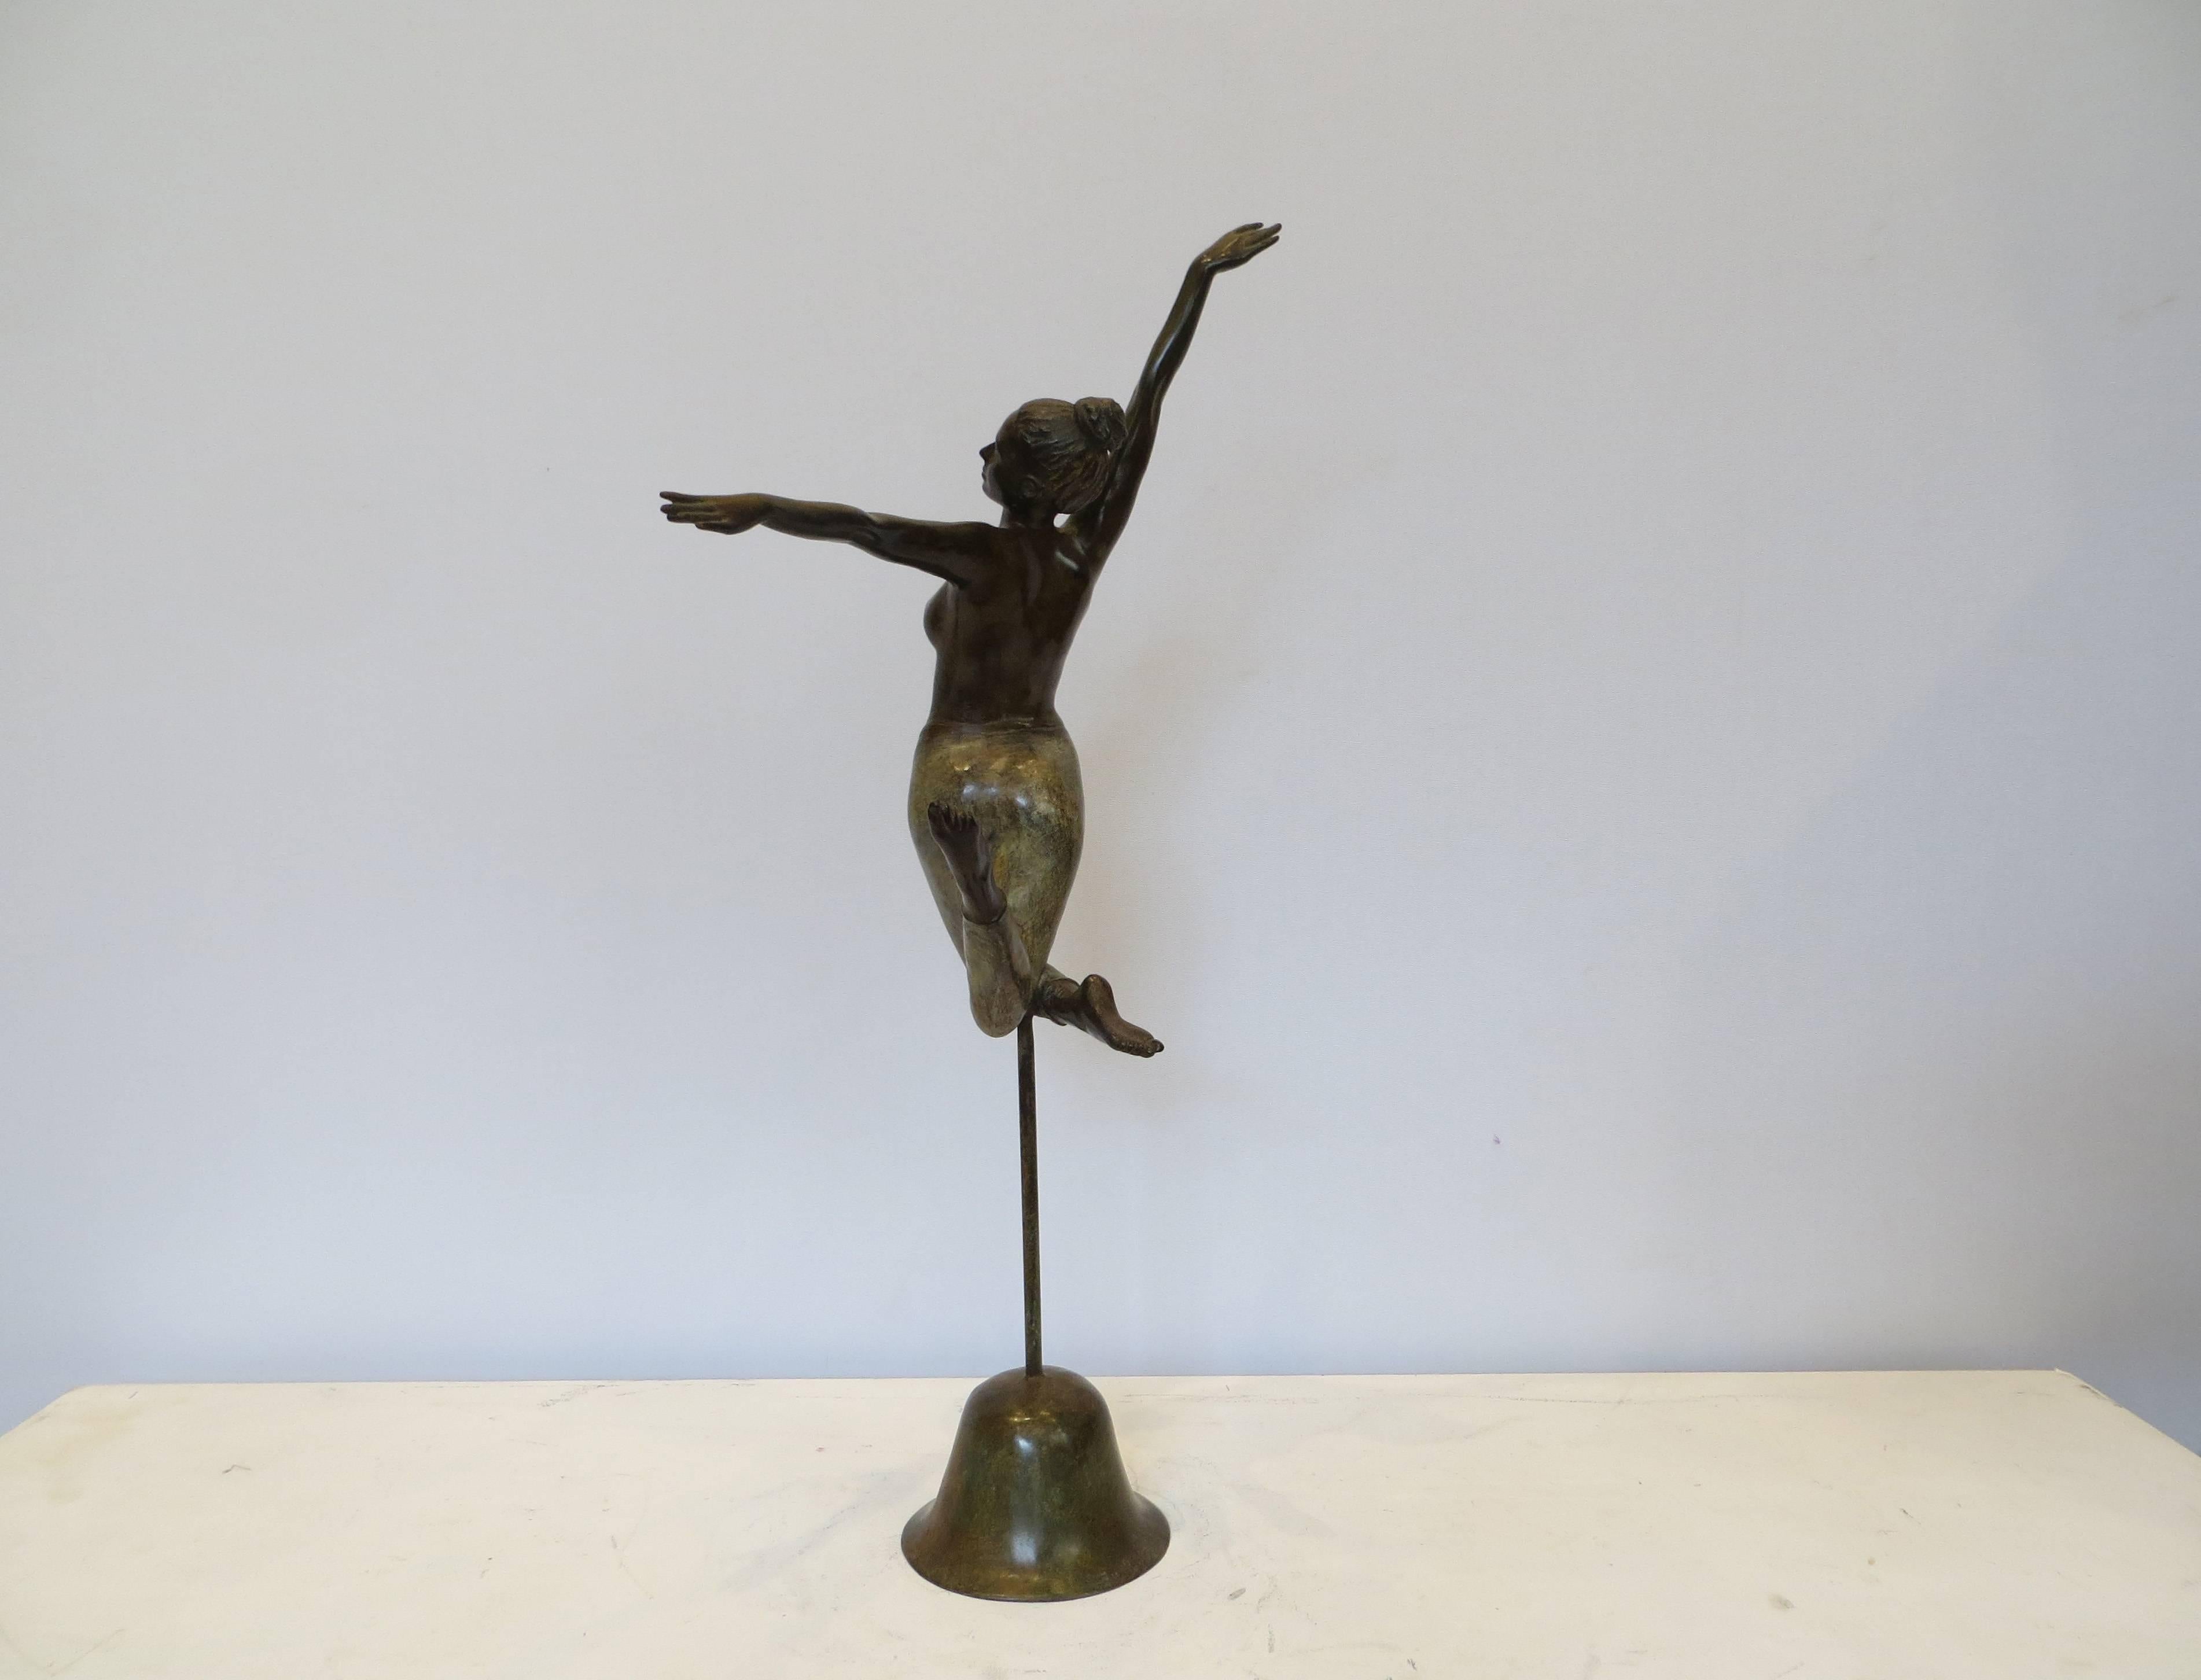 Irina - Or Figurative Sculpture par Patrick Brun